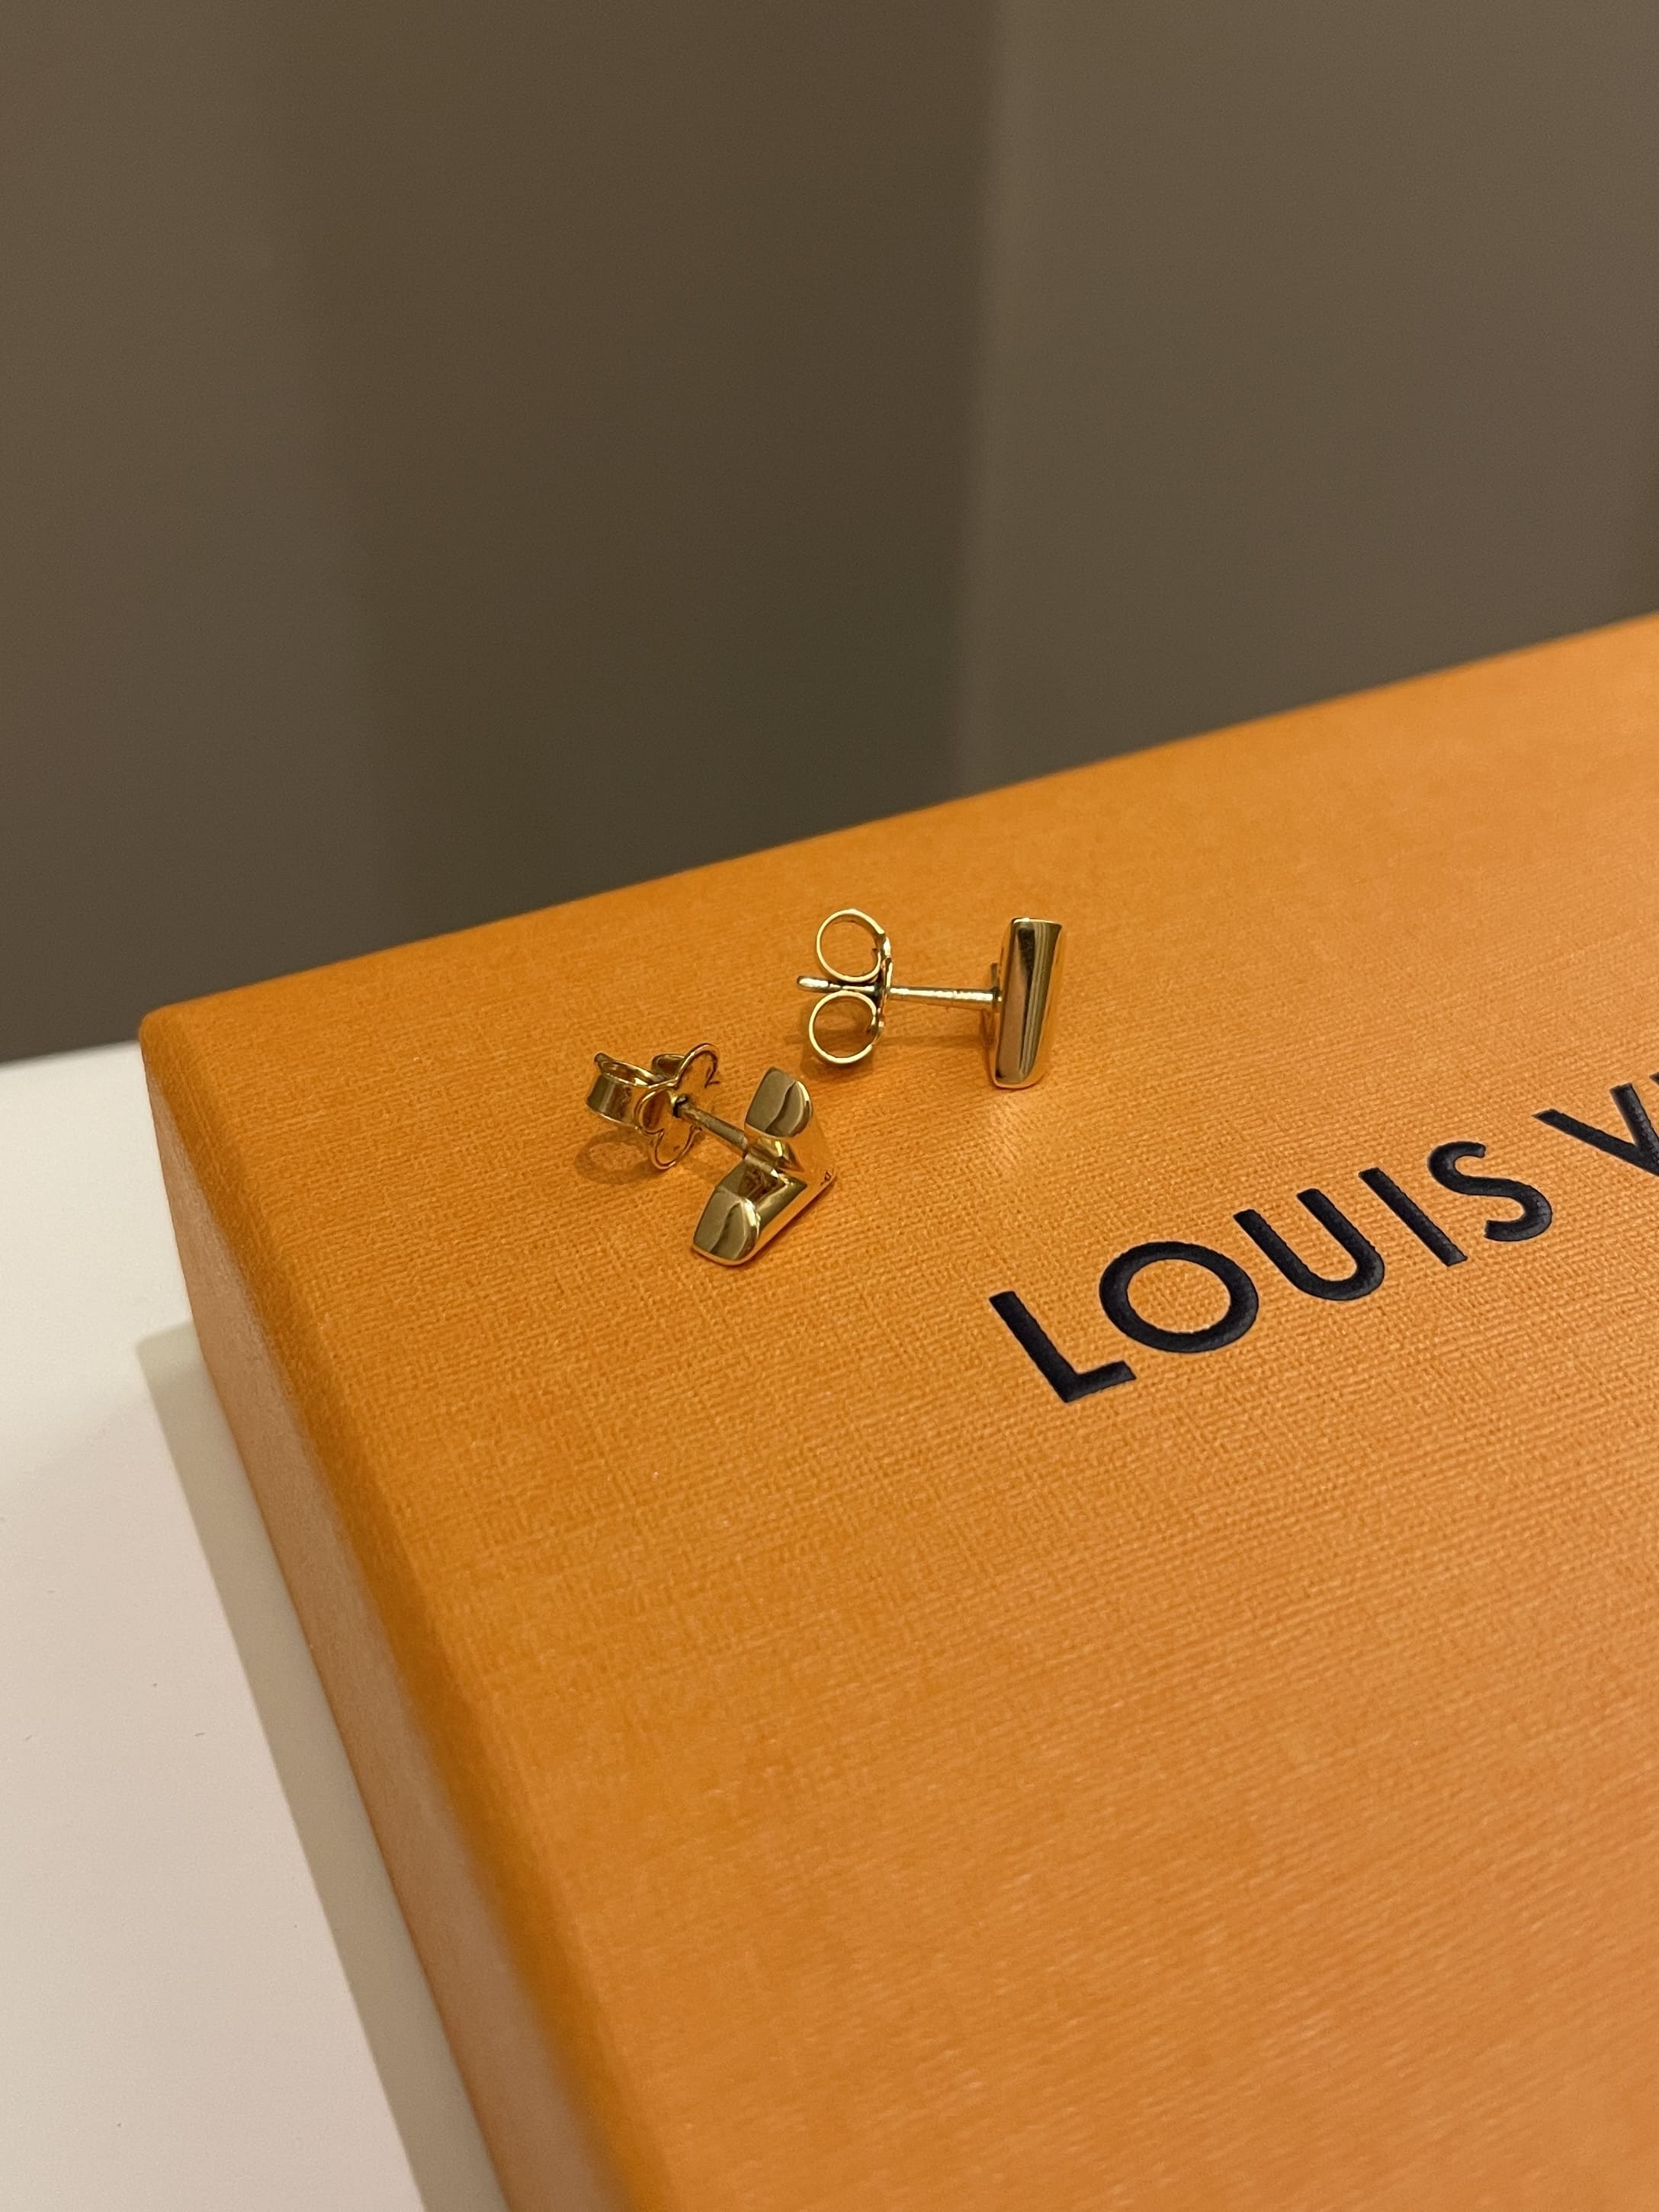 Louis Vuitton V Essential V Stud Earrings